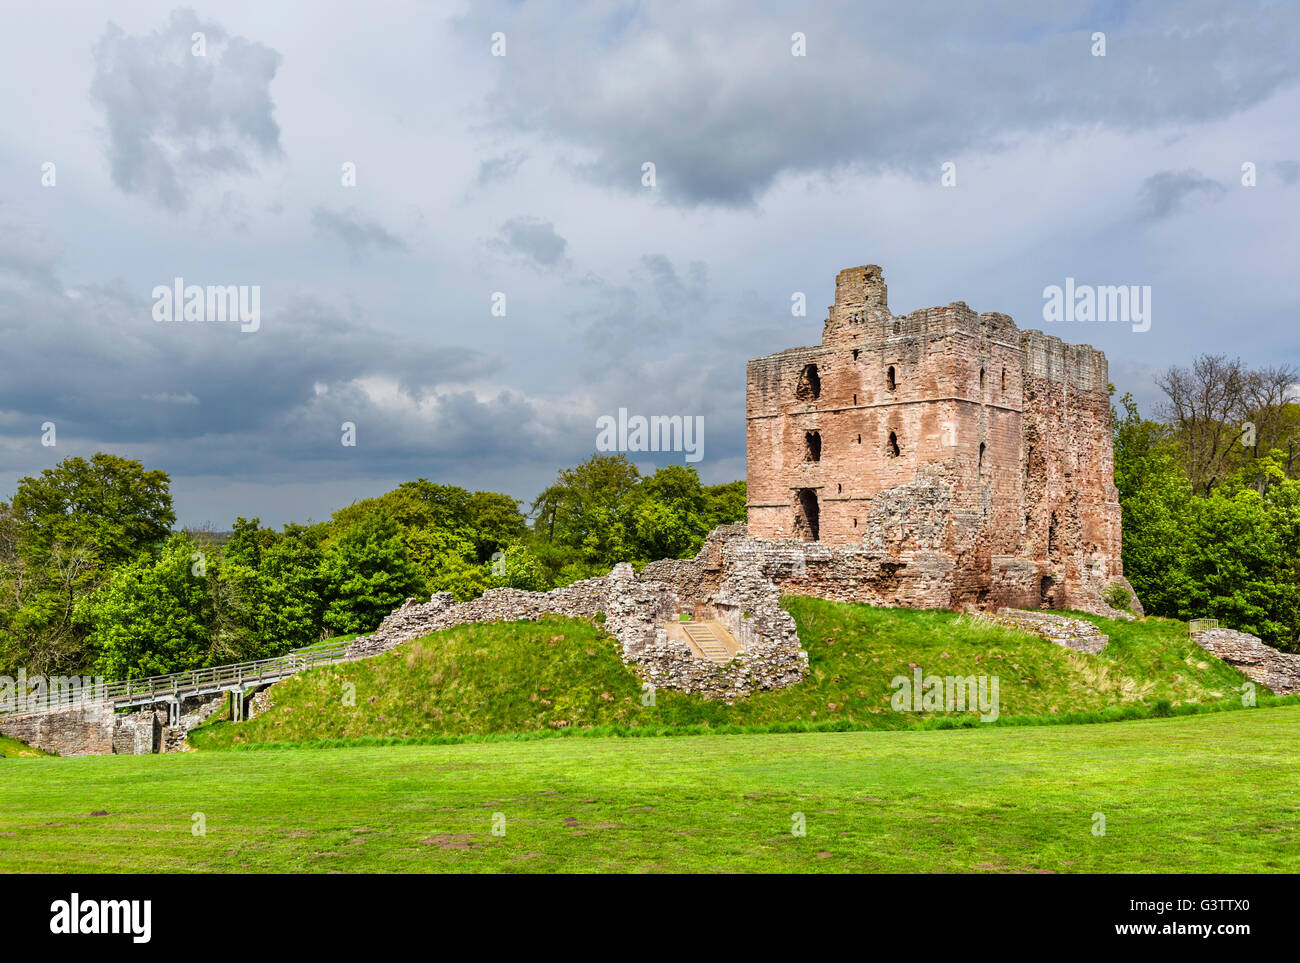 Les ruines de château de Norham, près de Berwick-upon-Tweed, Northumberland, England, UK Banque D'Images